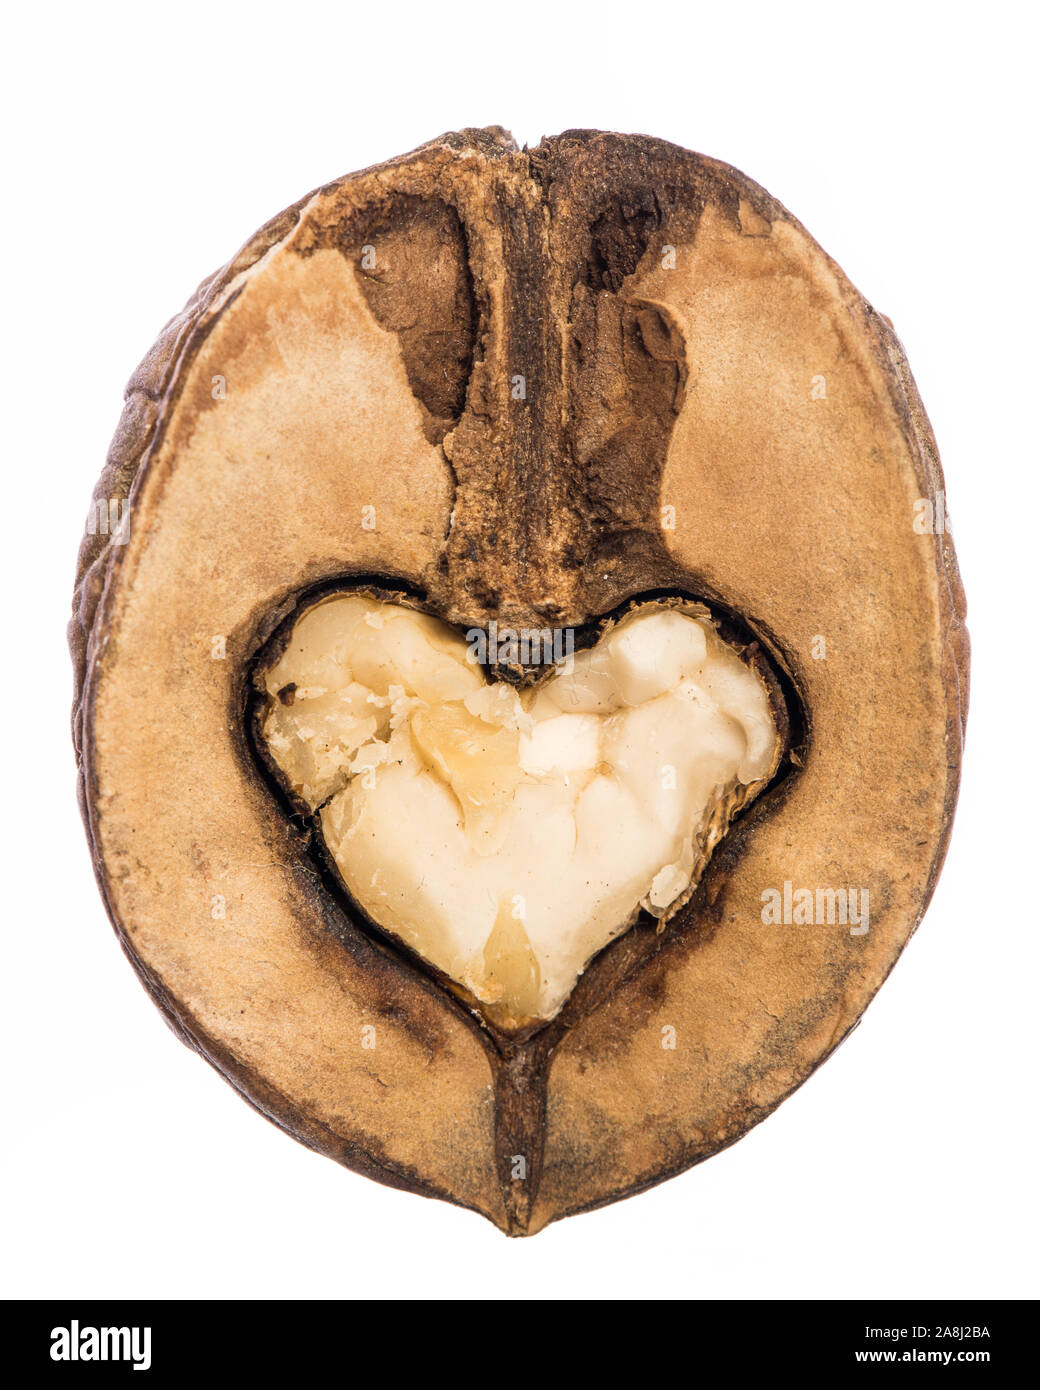 heart shaped kernel inside a half walnut isolated on white background Stock Photo